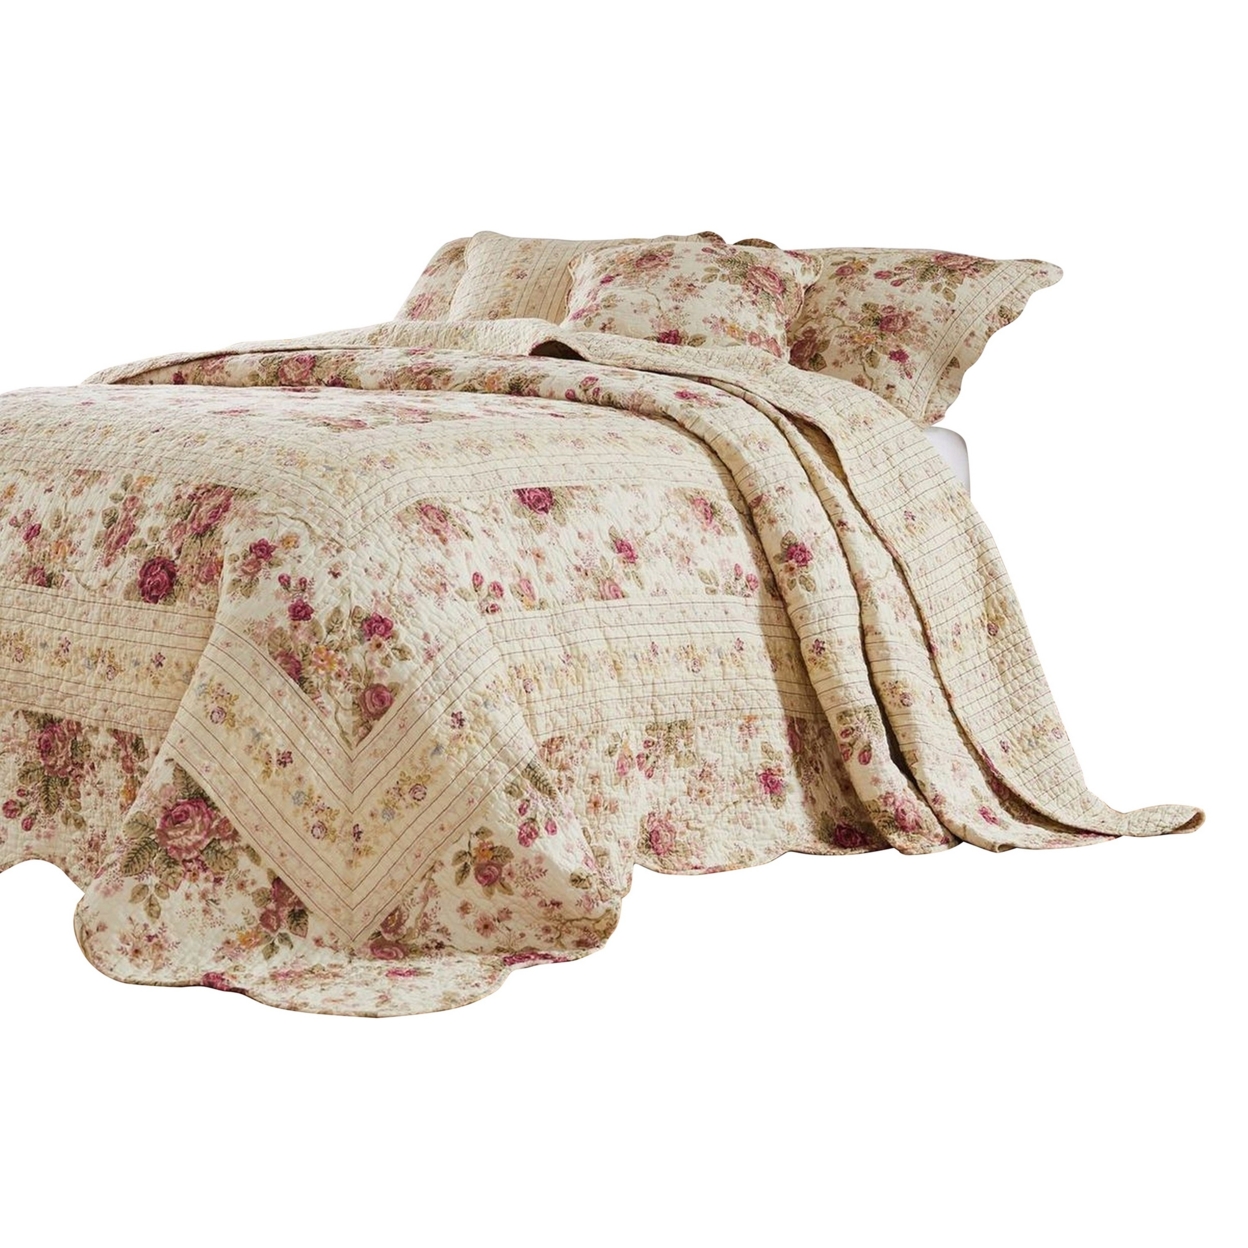 Rosle 3 Piece Queen Bedspread Set, Floral Print, Scalloped, Cream, Pink- Saltoro Sherpi